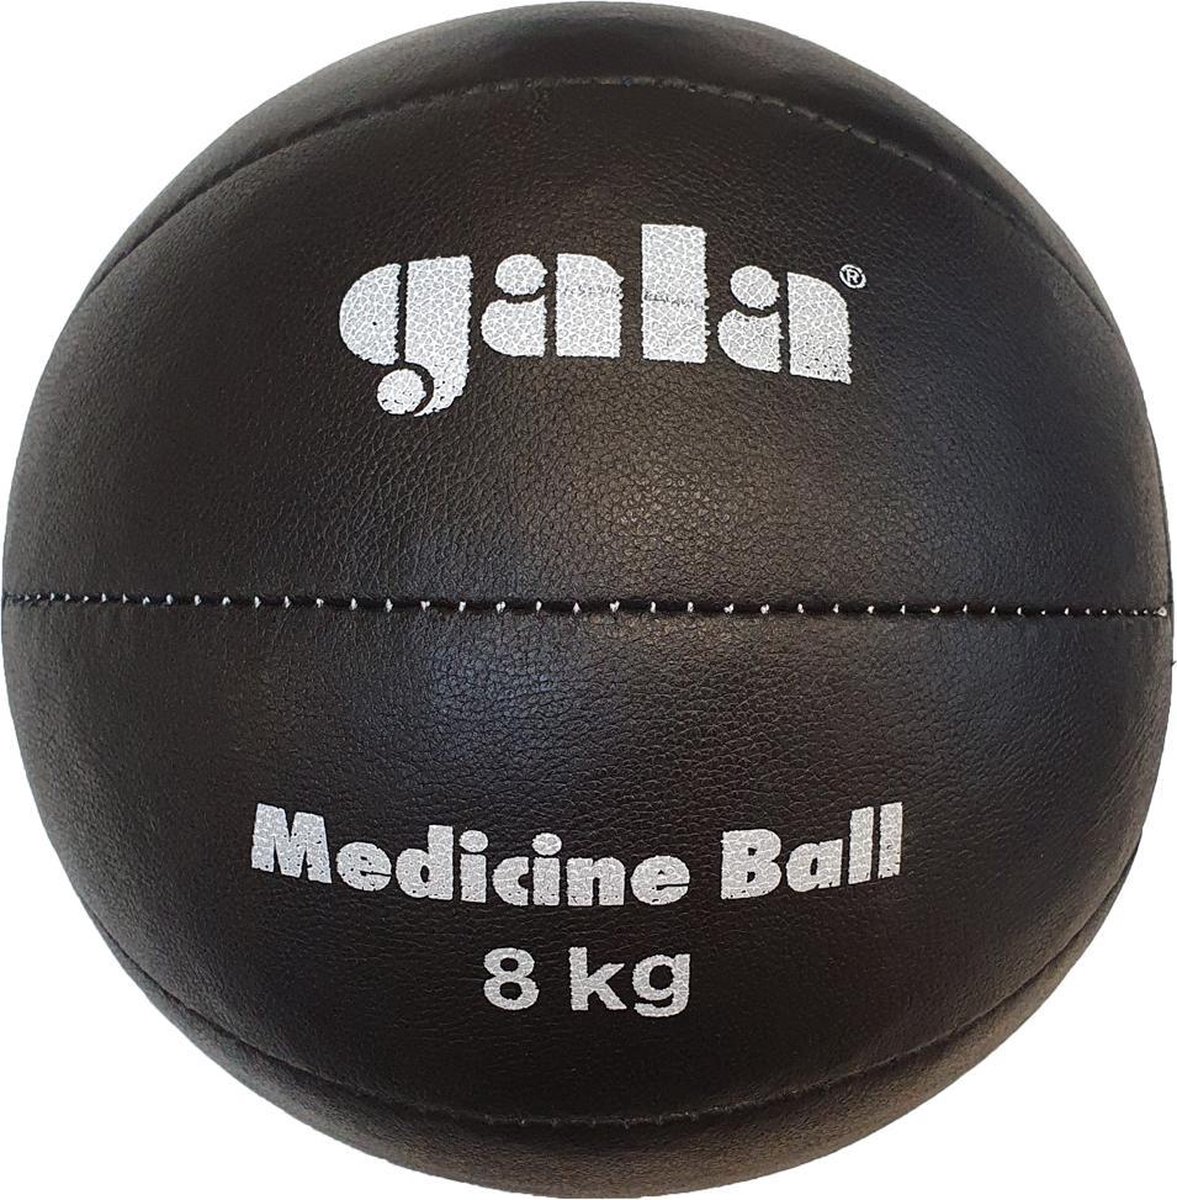 Gala Medicine Ball - Medicijn bal - 8 kg - Zwart Leer